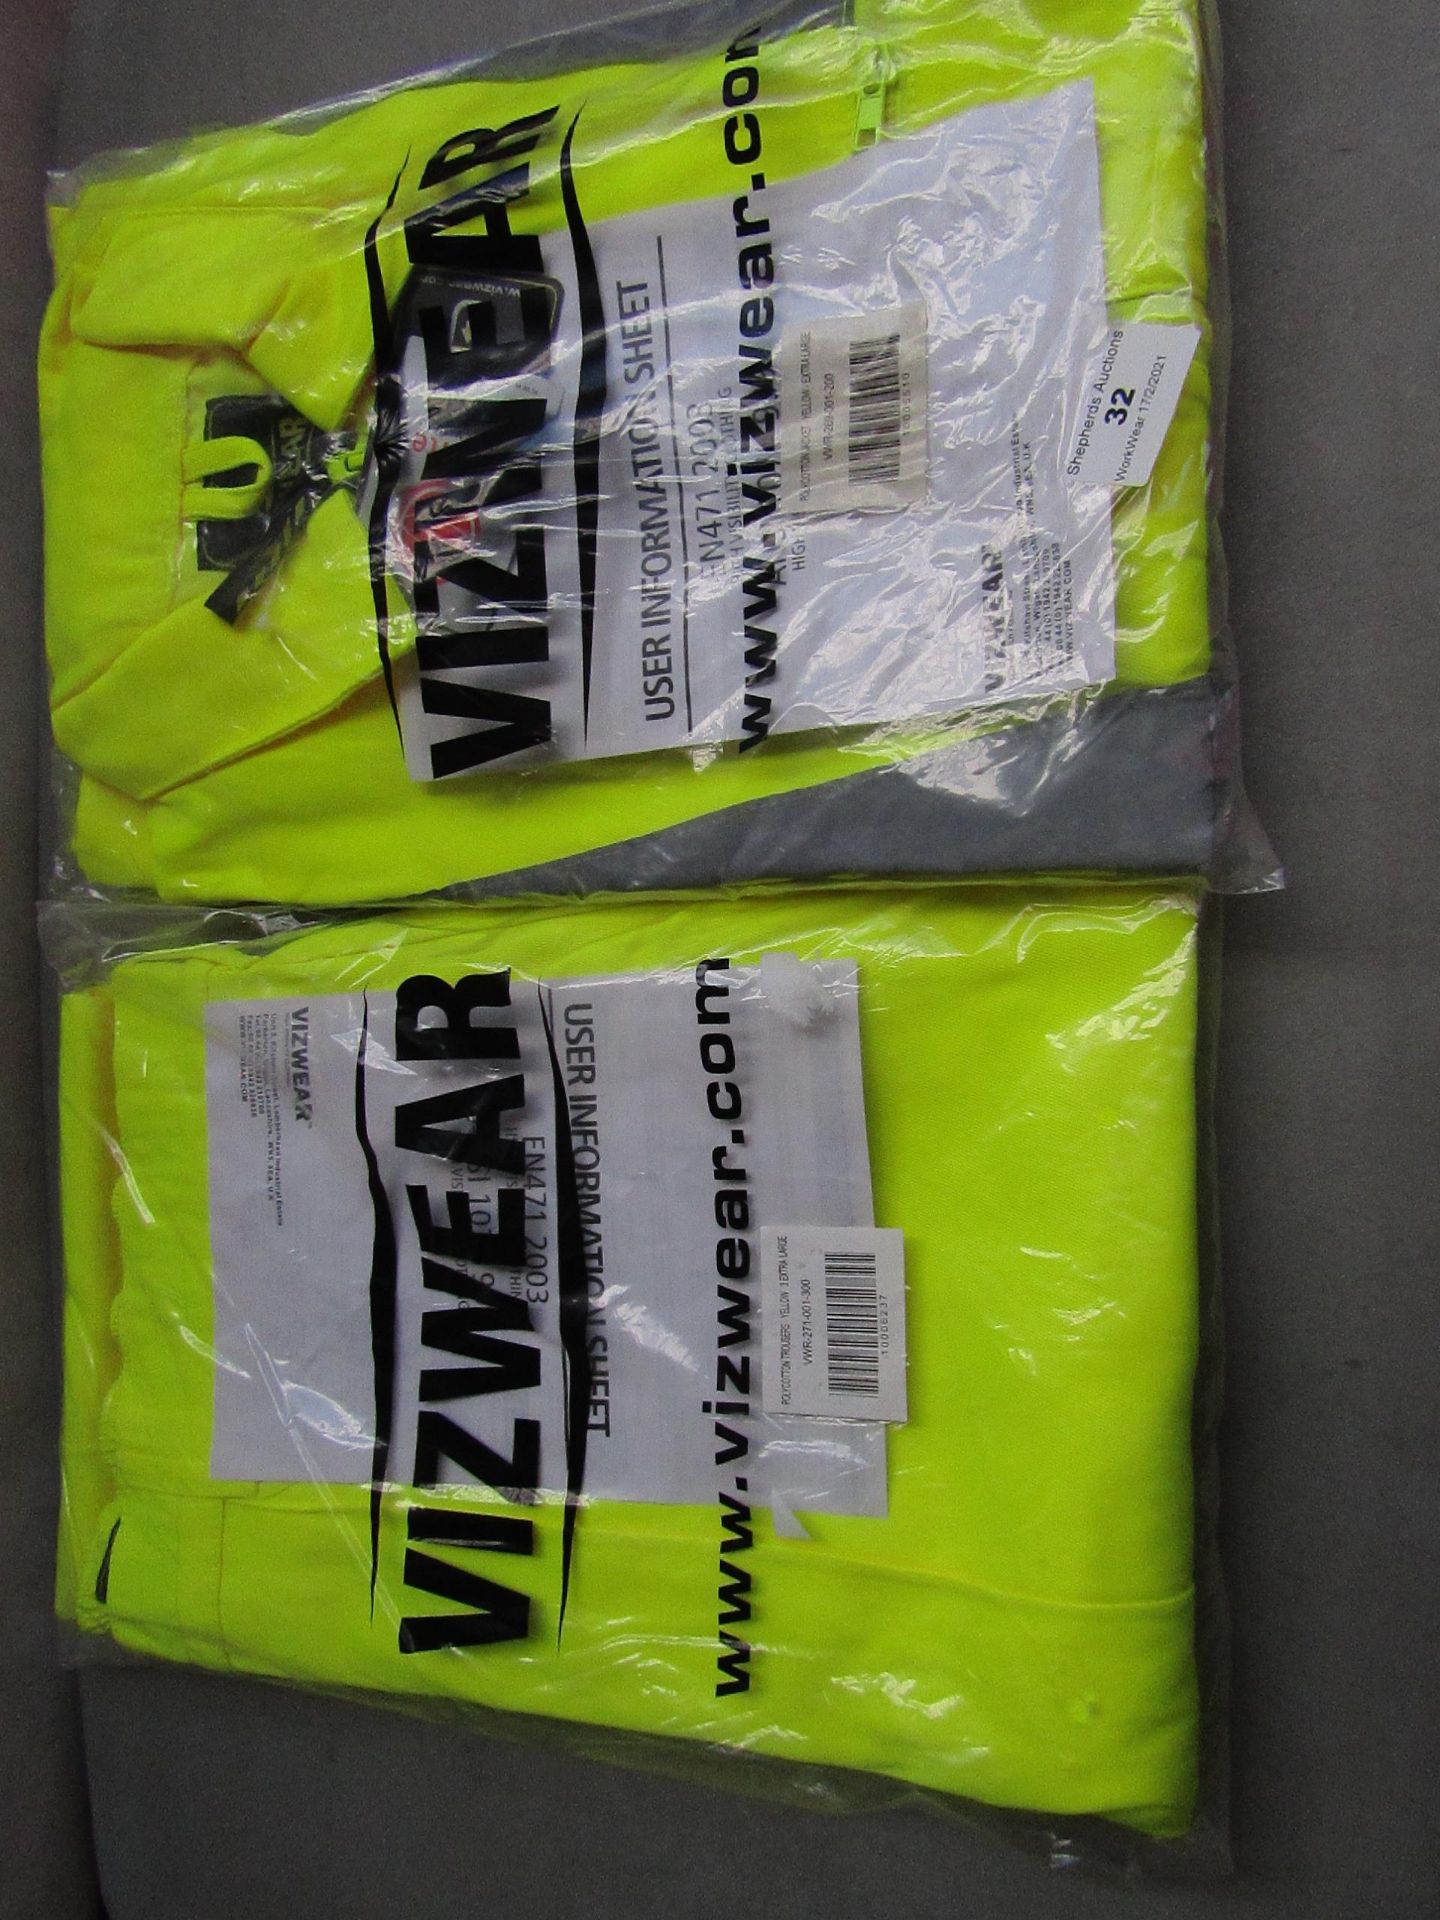 VIZWEAR SET - 1x Vizwear - Polycotton Jacket Hi-Vis Yellow - Size XL - Unused & Packaged. 1x Vizwear